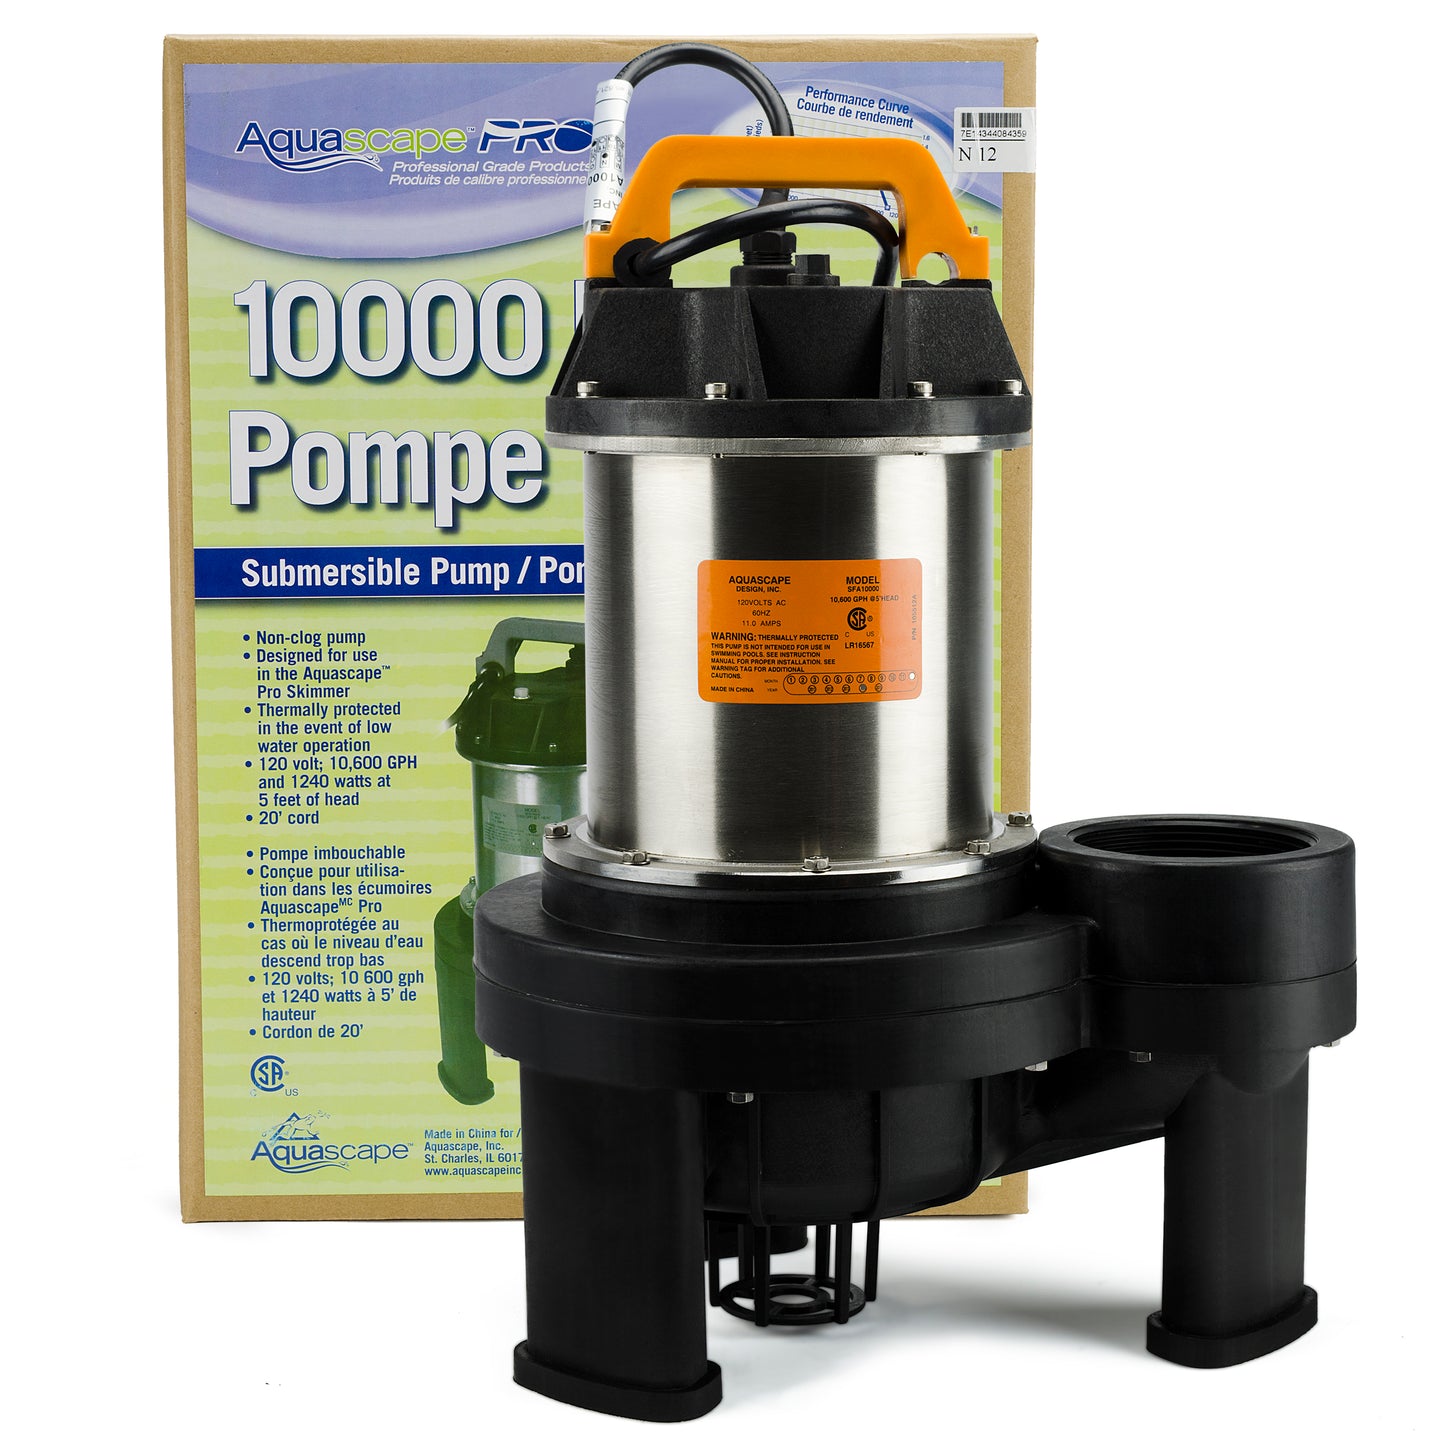 AquascapePRO 10,000 Pond Pump